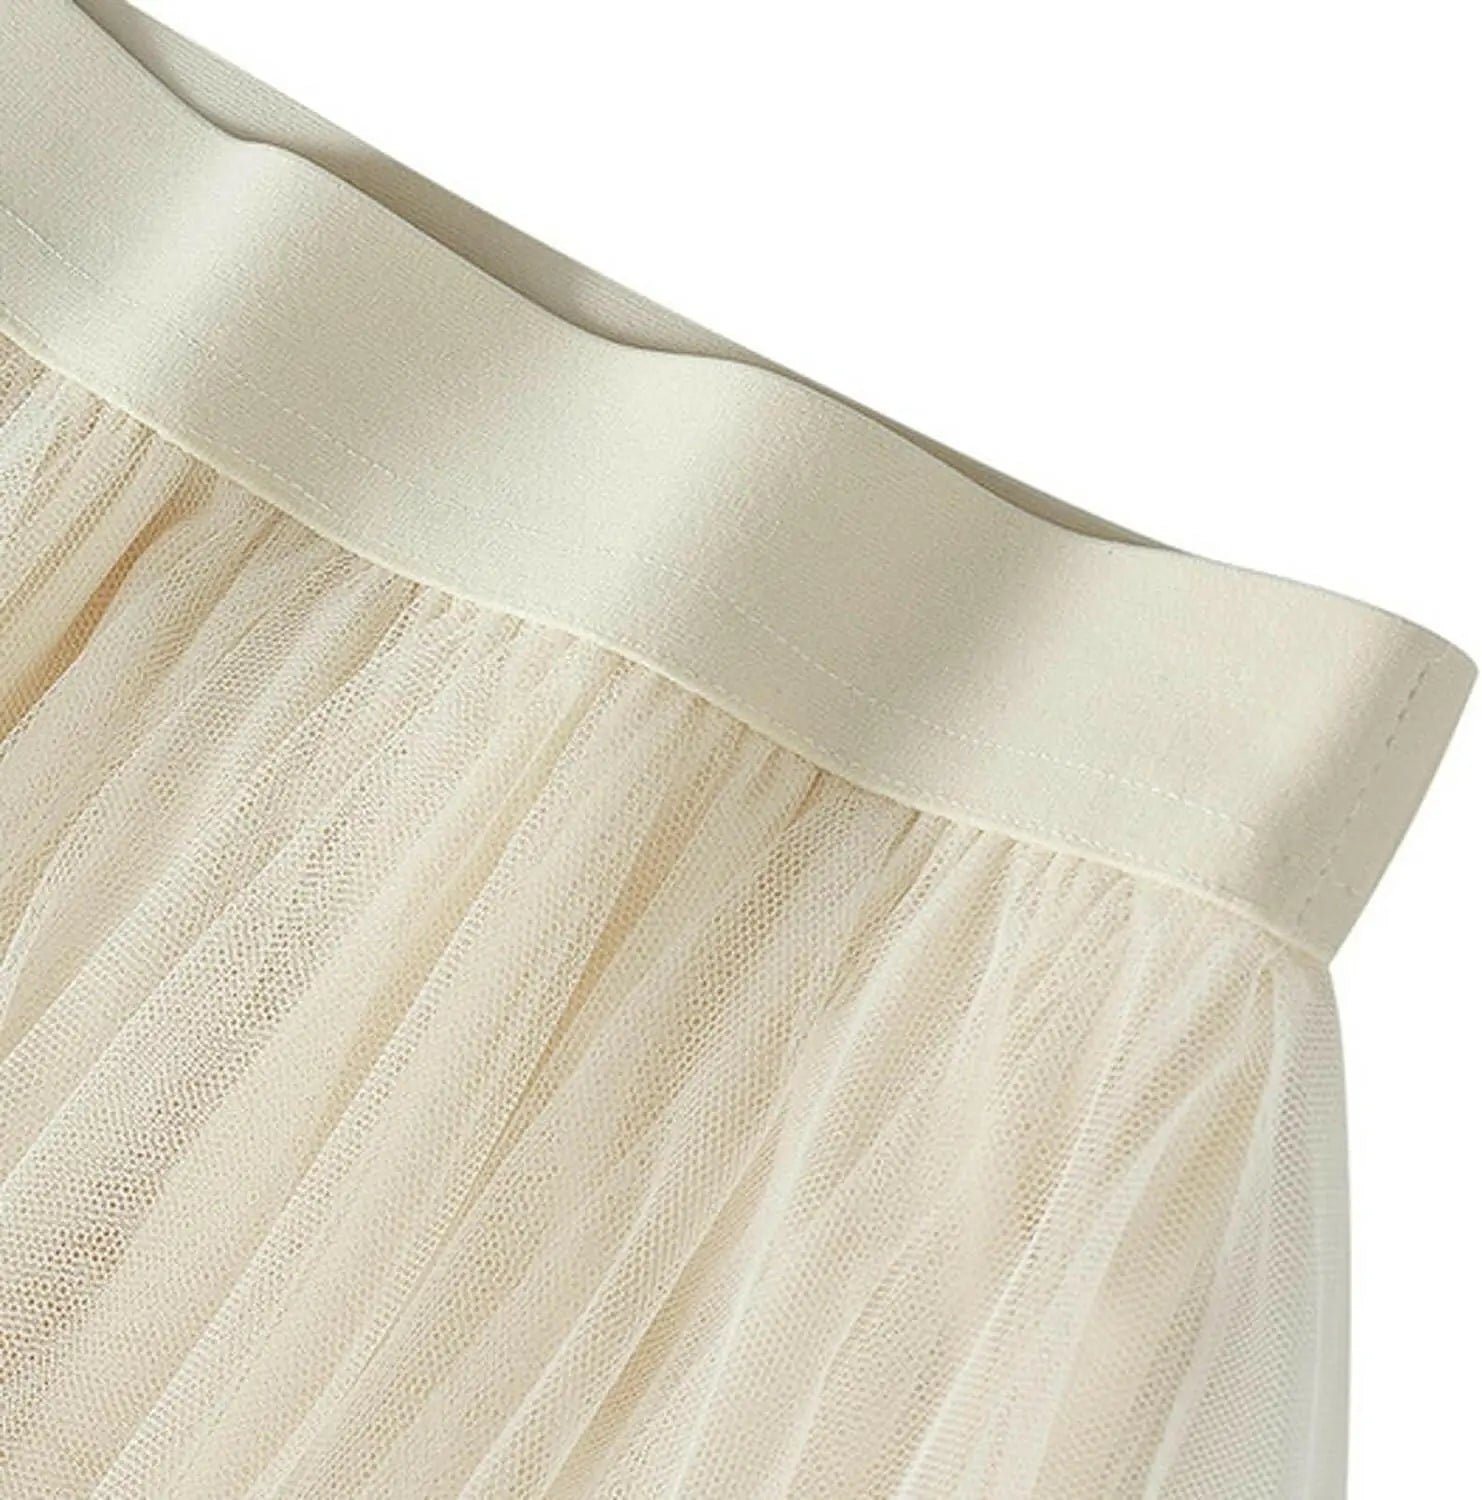 Tulle Skirts for Women 3 Layered High Low Asymmetrical Midi Length Elastic Waist Mesh Tutu Skirts